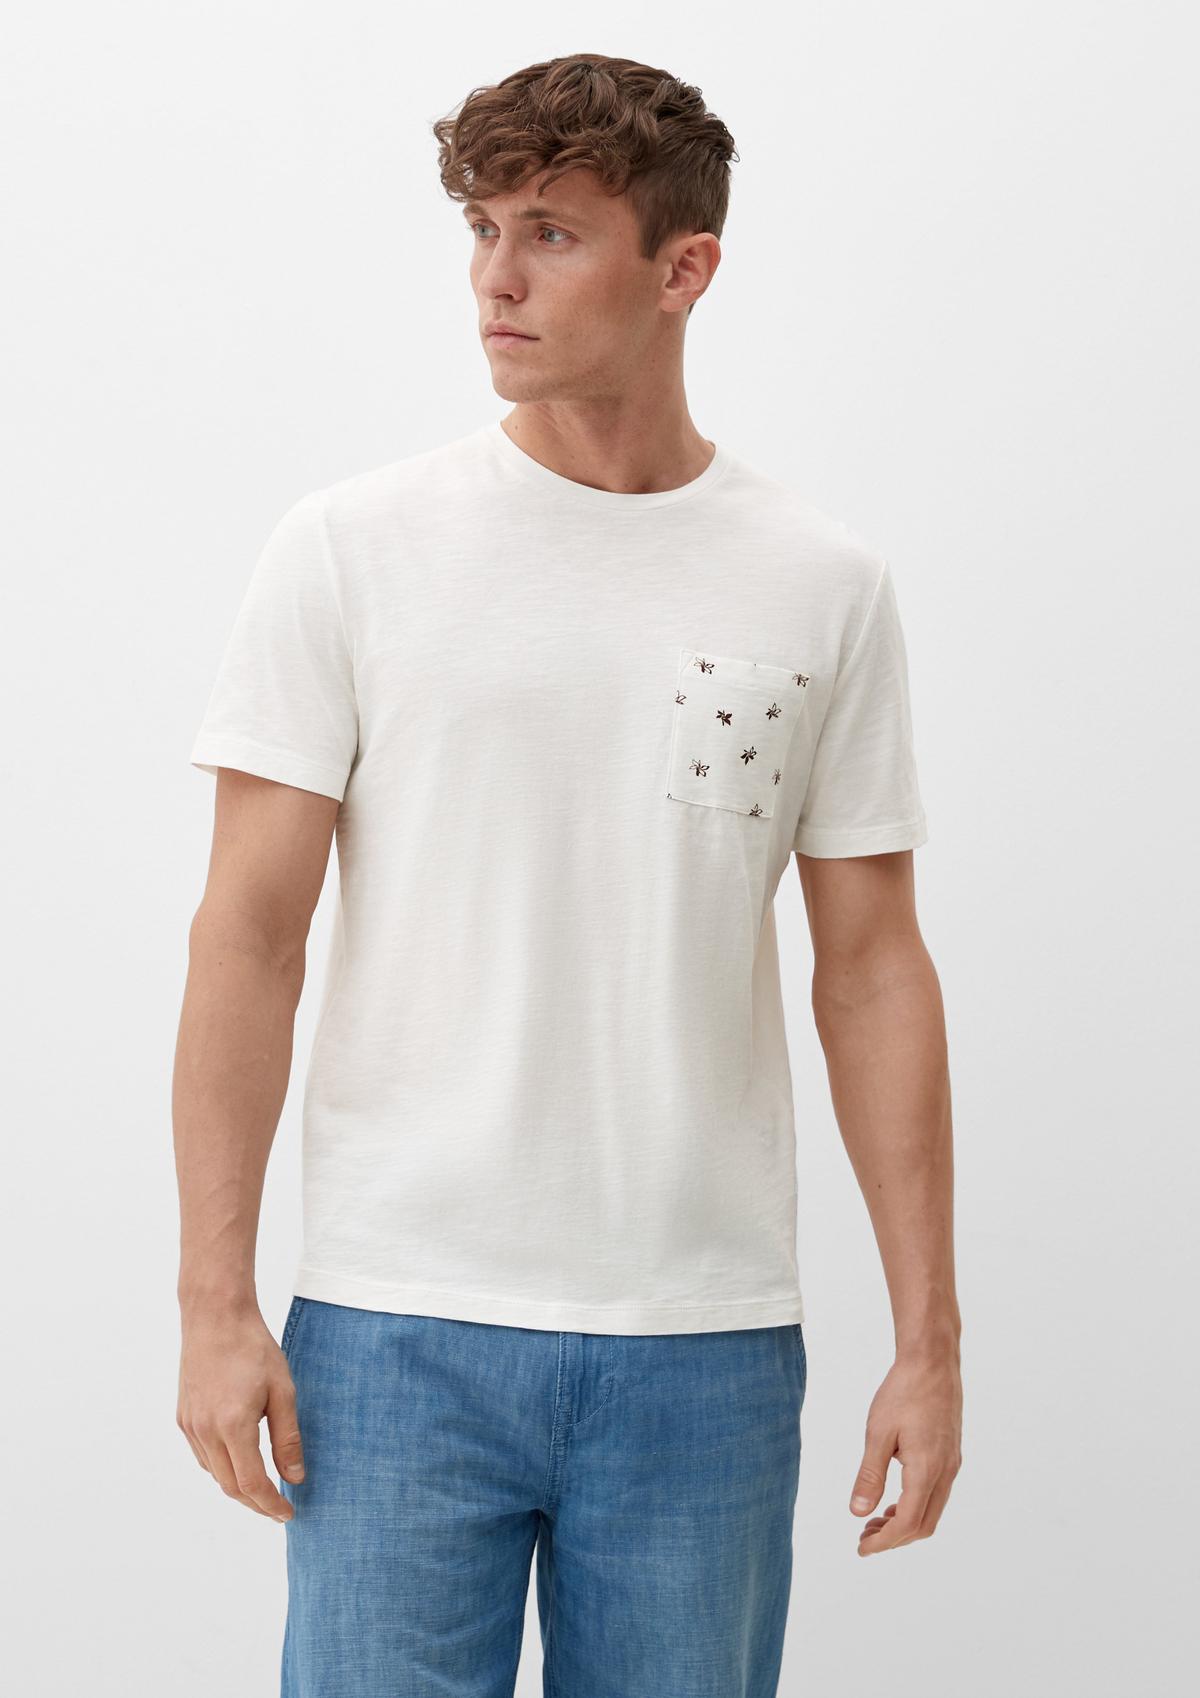 T-shirt - white Cotton